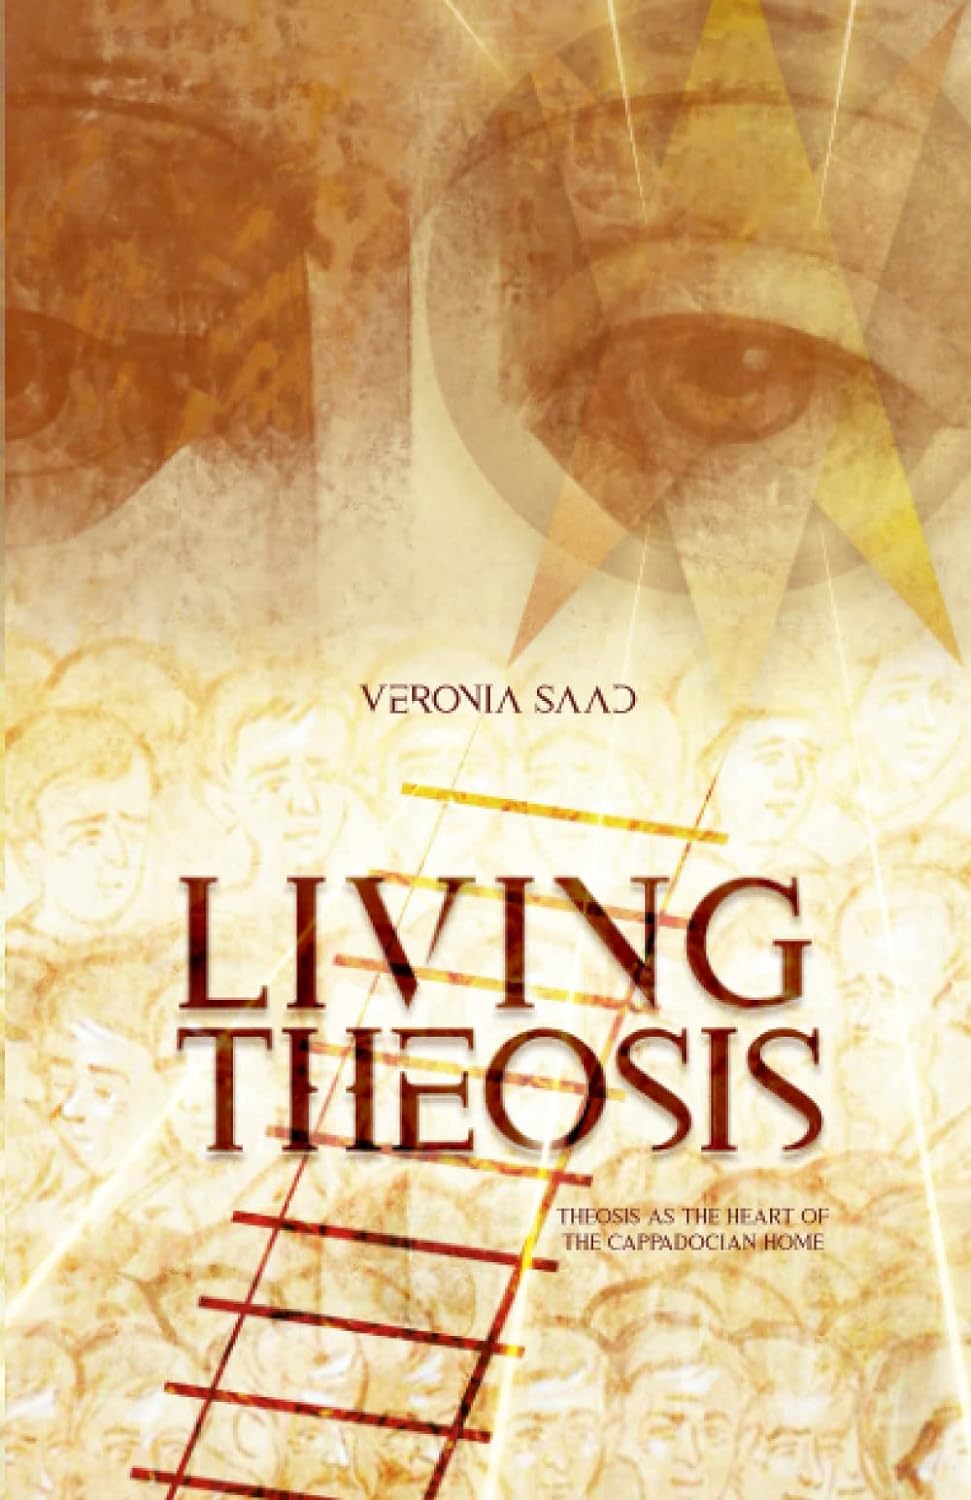 Living Theosis: Theosis As the Heart of the Cappadocian Home